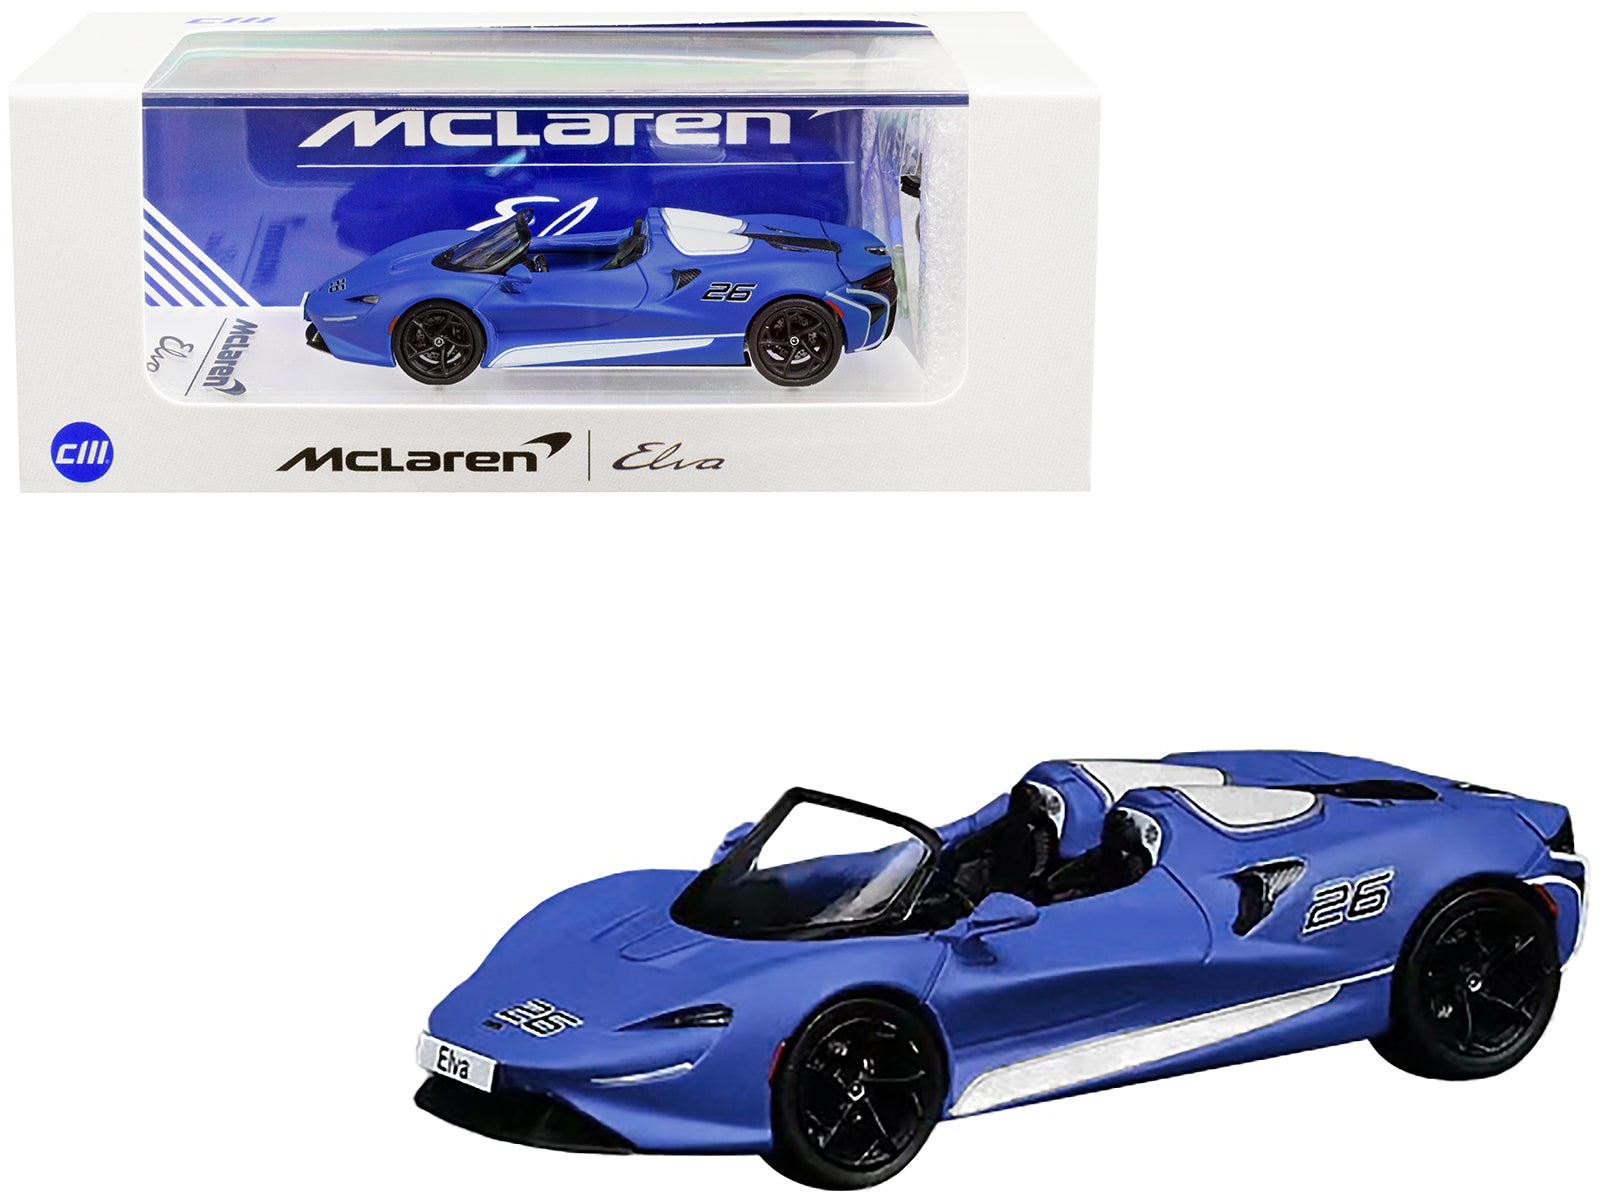 McLaren Elva Convertible #26 Matt Blue with White Stripes and Extra Wheels 1/64 Diecast Model Car by CM Models